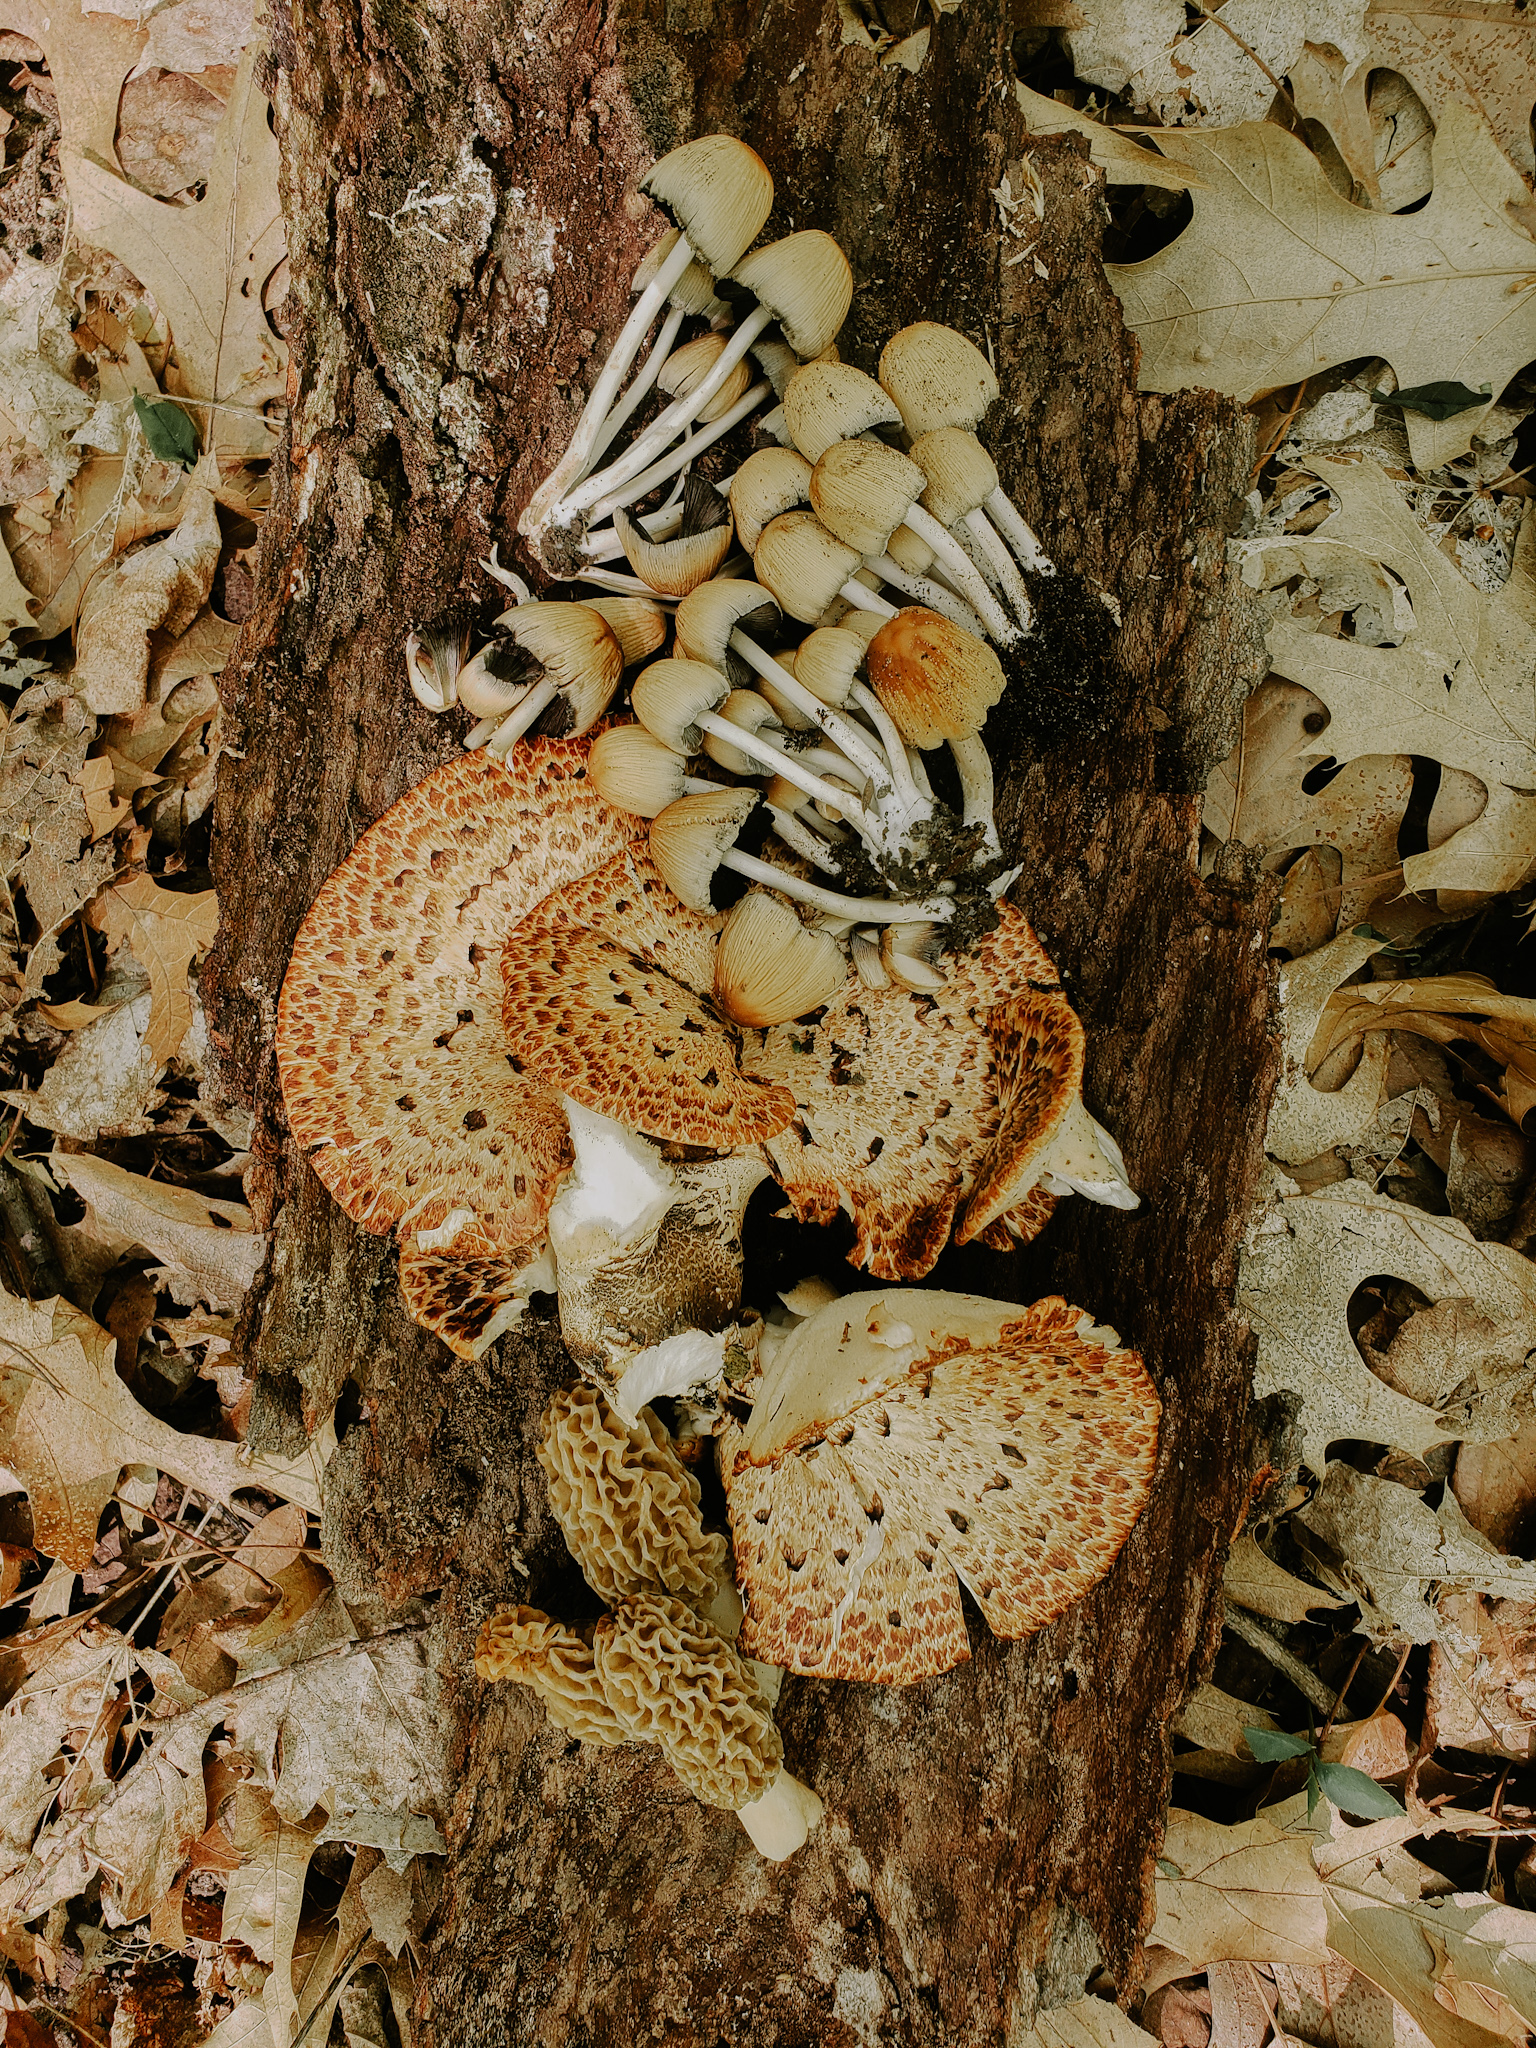 Assortment of wild mushrooms I found.